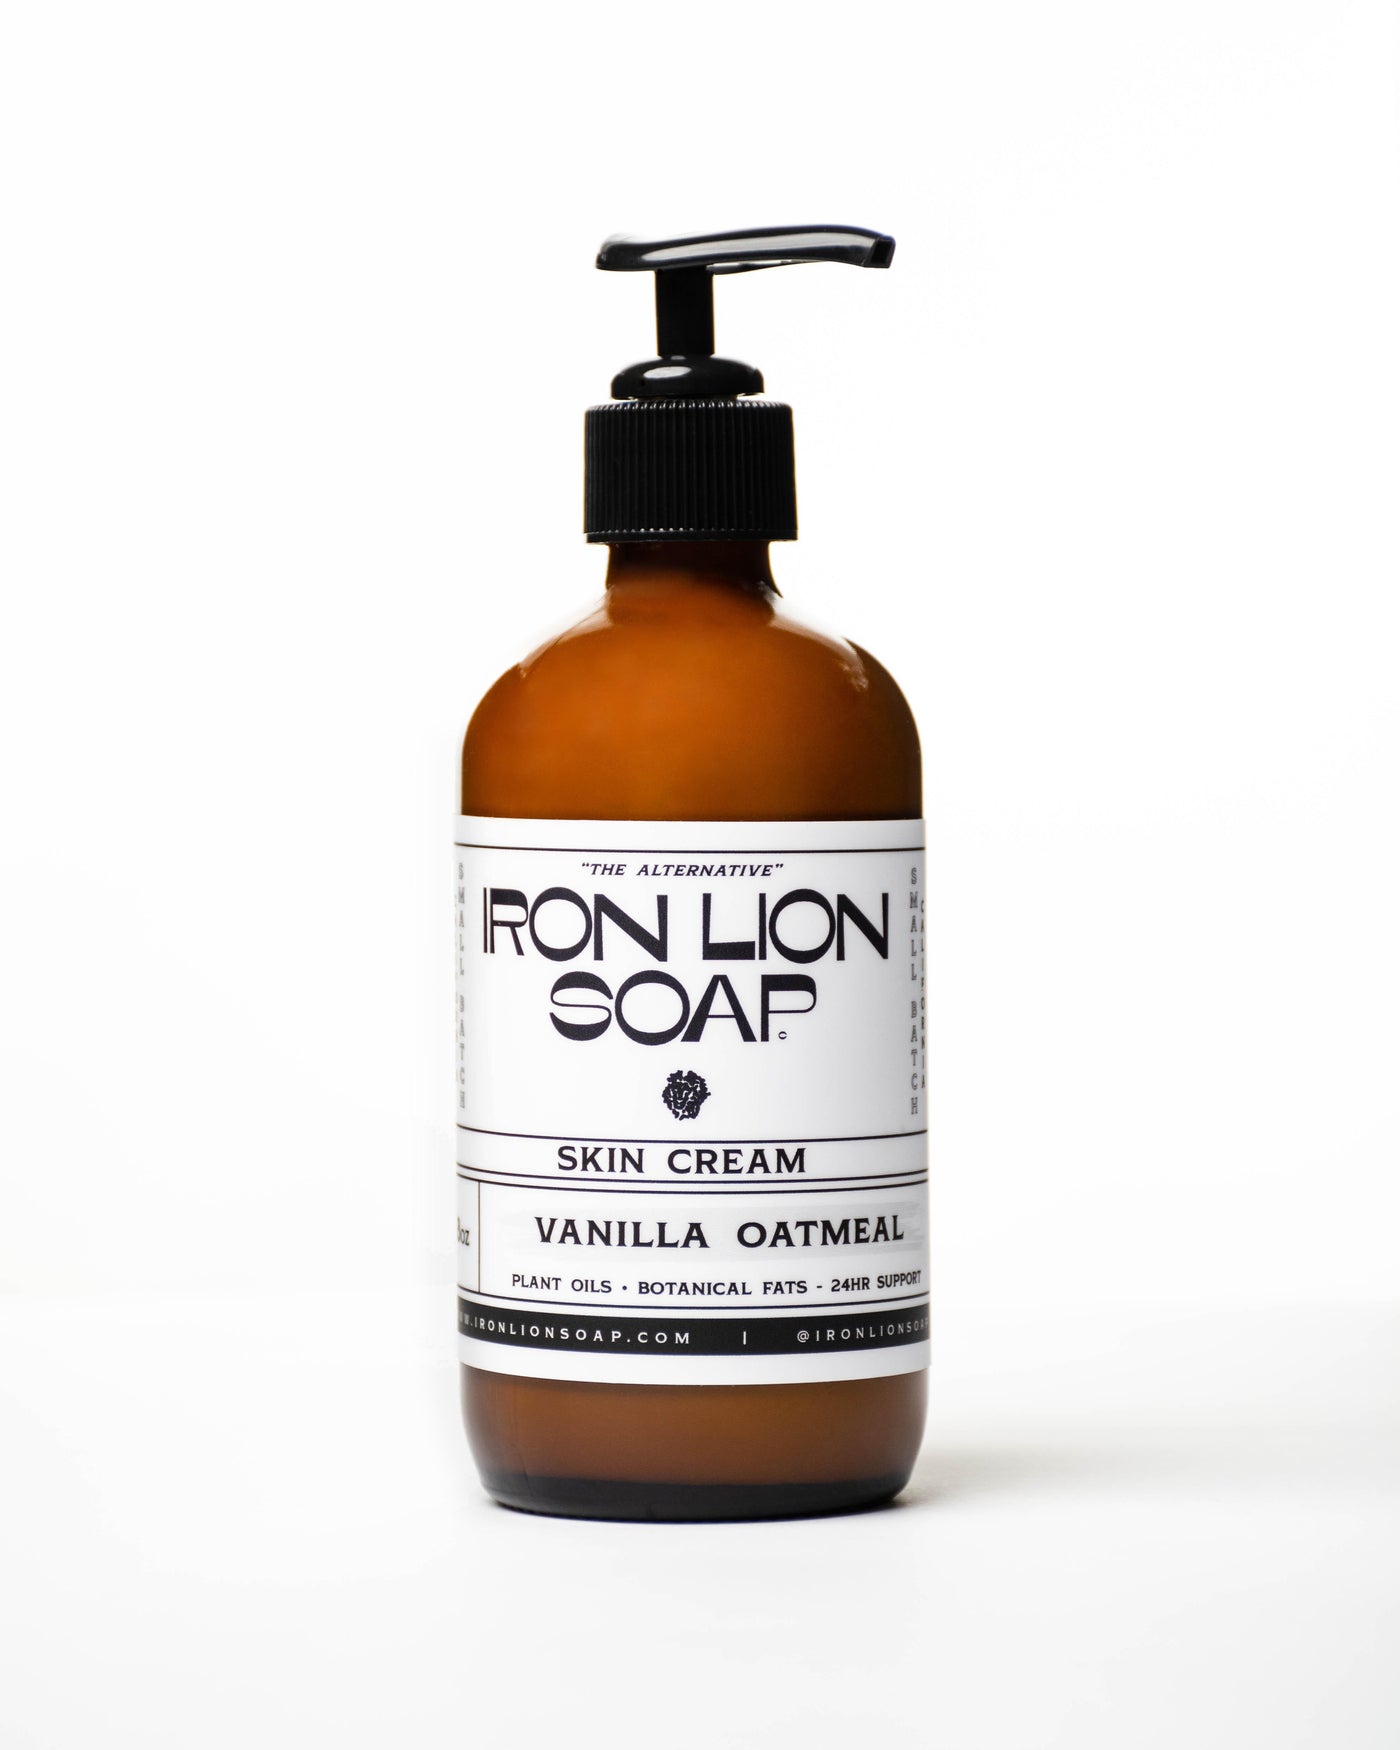 8oz Daily Skin Cream Iron Lion Soap Vanilla Oatmeal 